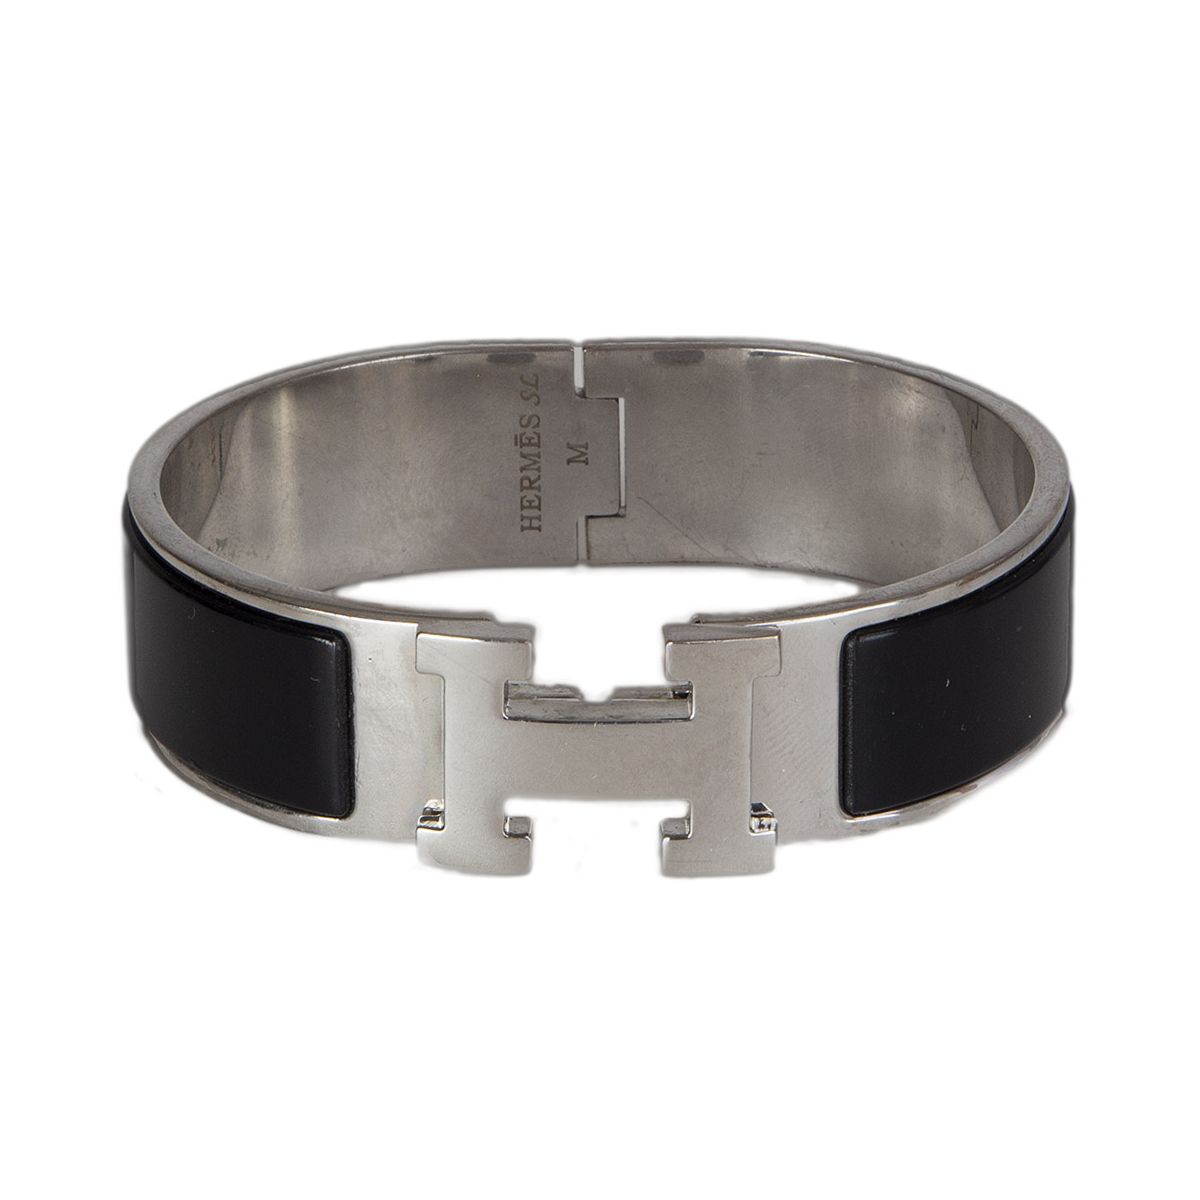 Shop HERMES Clic Clac H bracelet by Luxurywithdiscounts